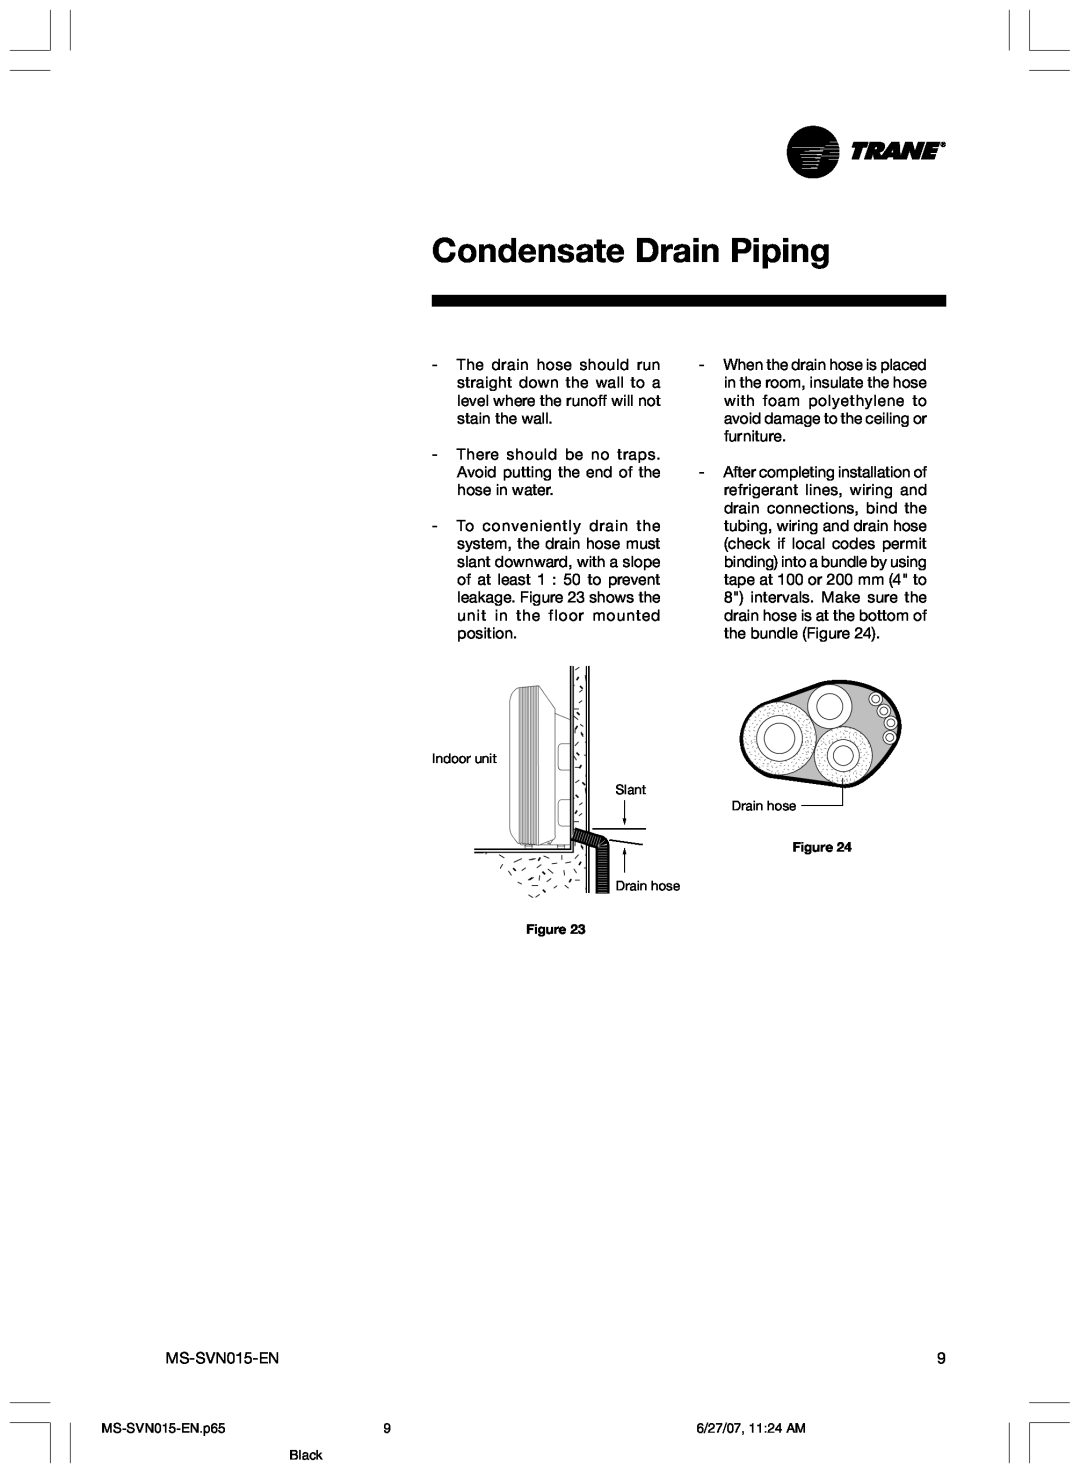 Trane MS-SVN015-EN installation manual Condensate Drain Piping 